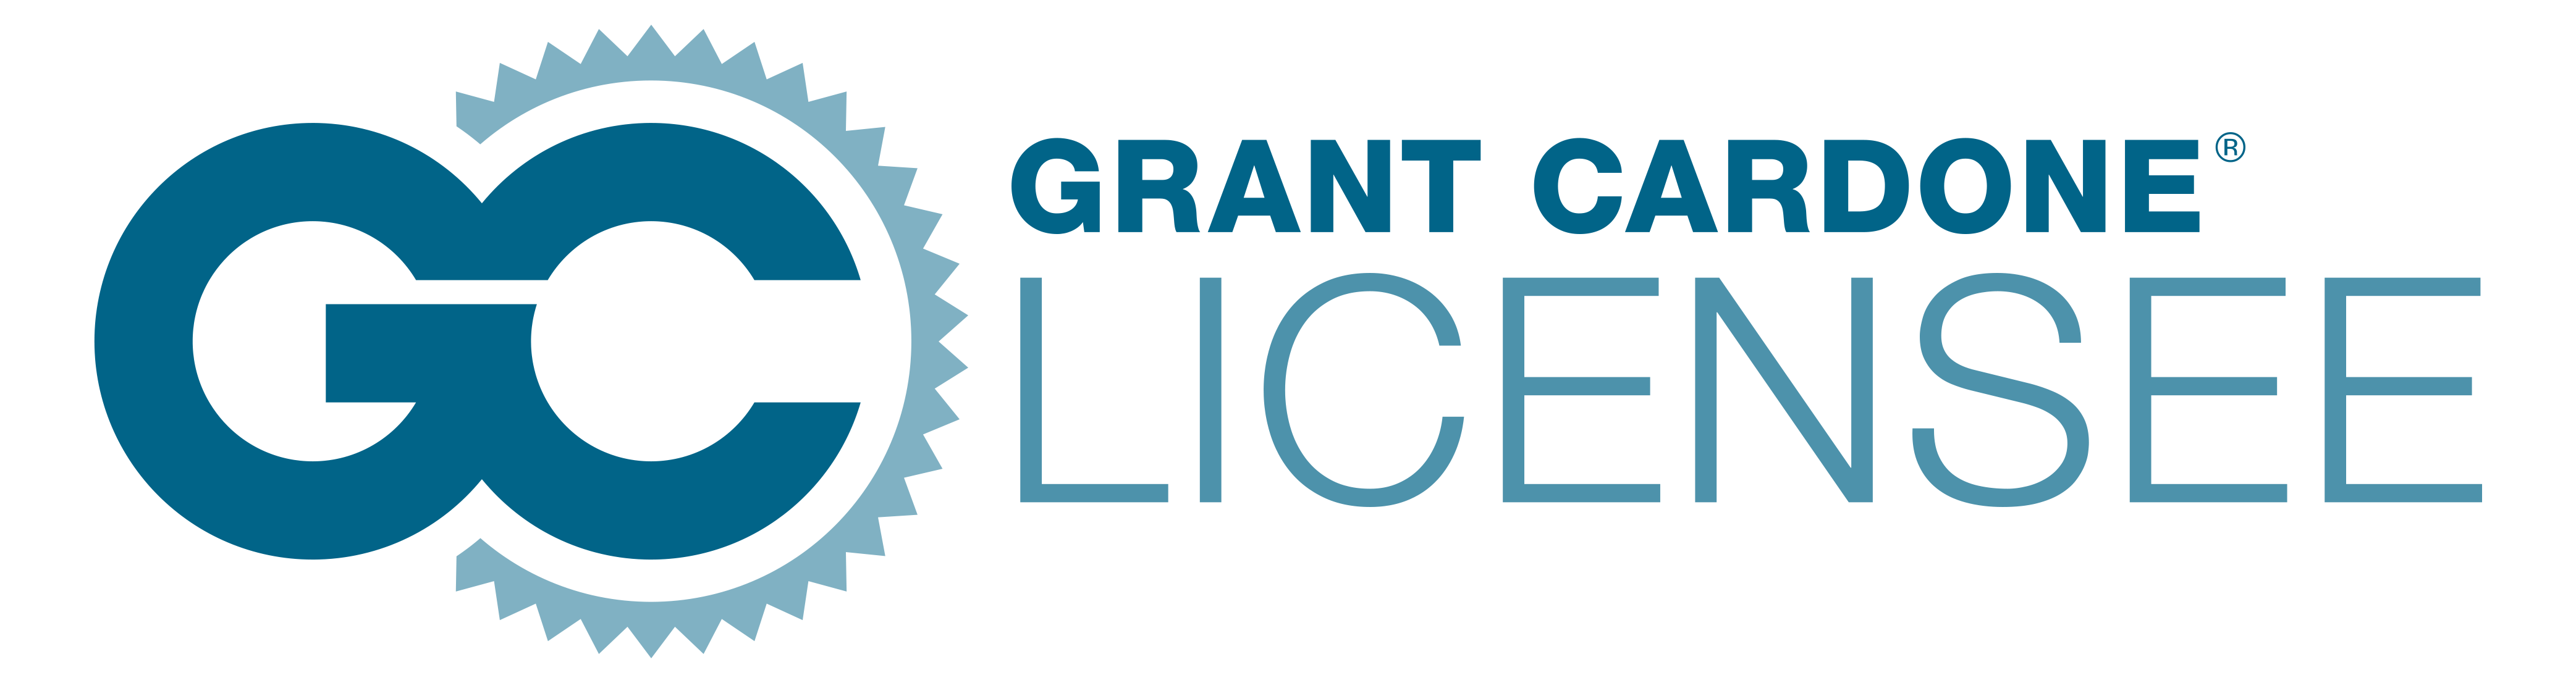 Grant Cardone Licensee Program - Horizontal LOGO-1